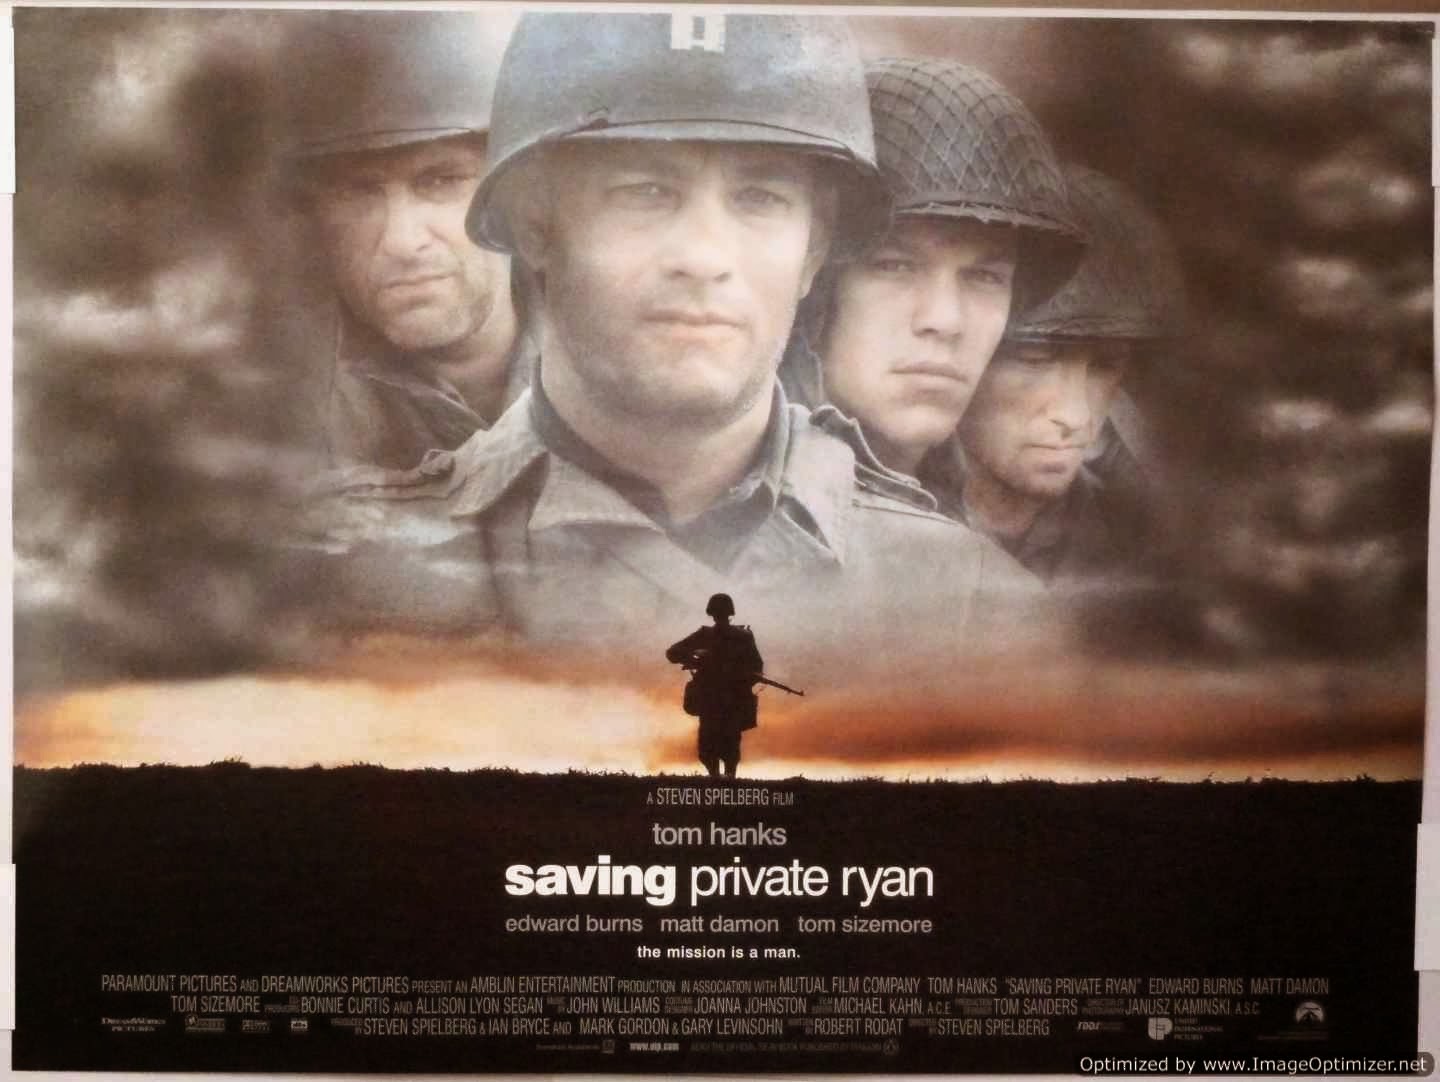 Watch Free Movie Online : Watch Free Saving Private Ryan (1998) Movie